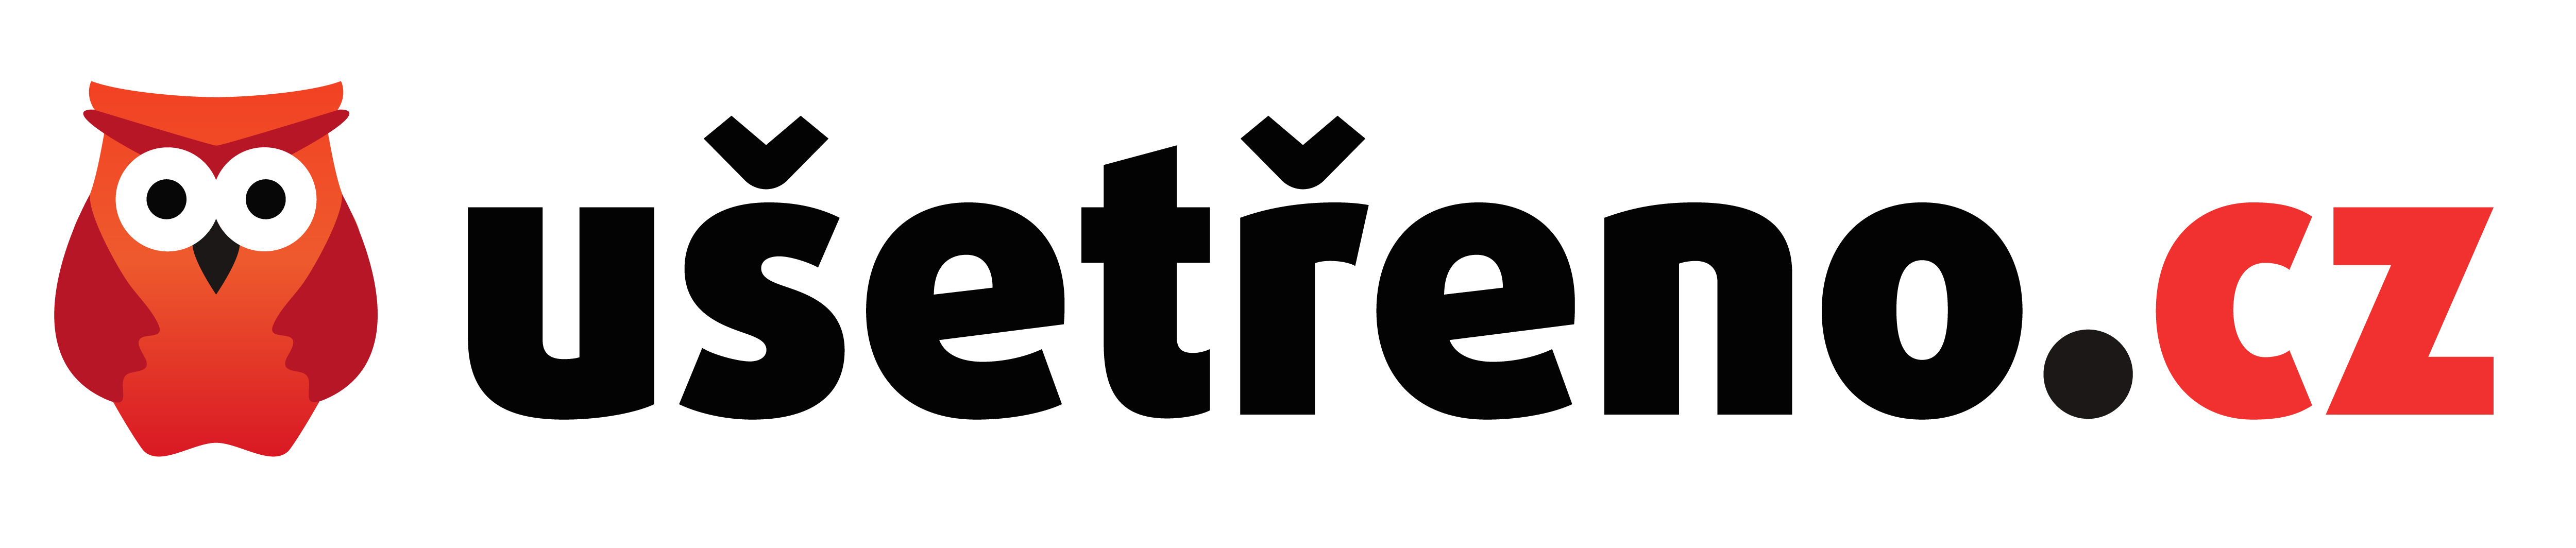 logo-usetreno-print